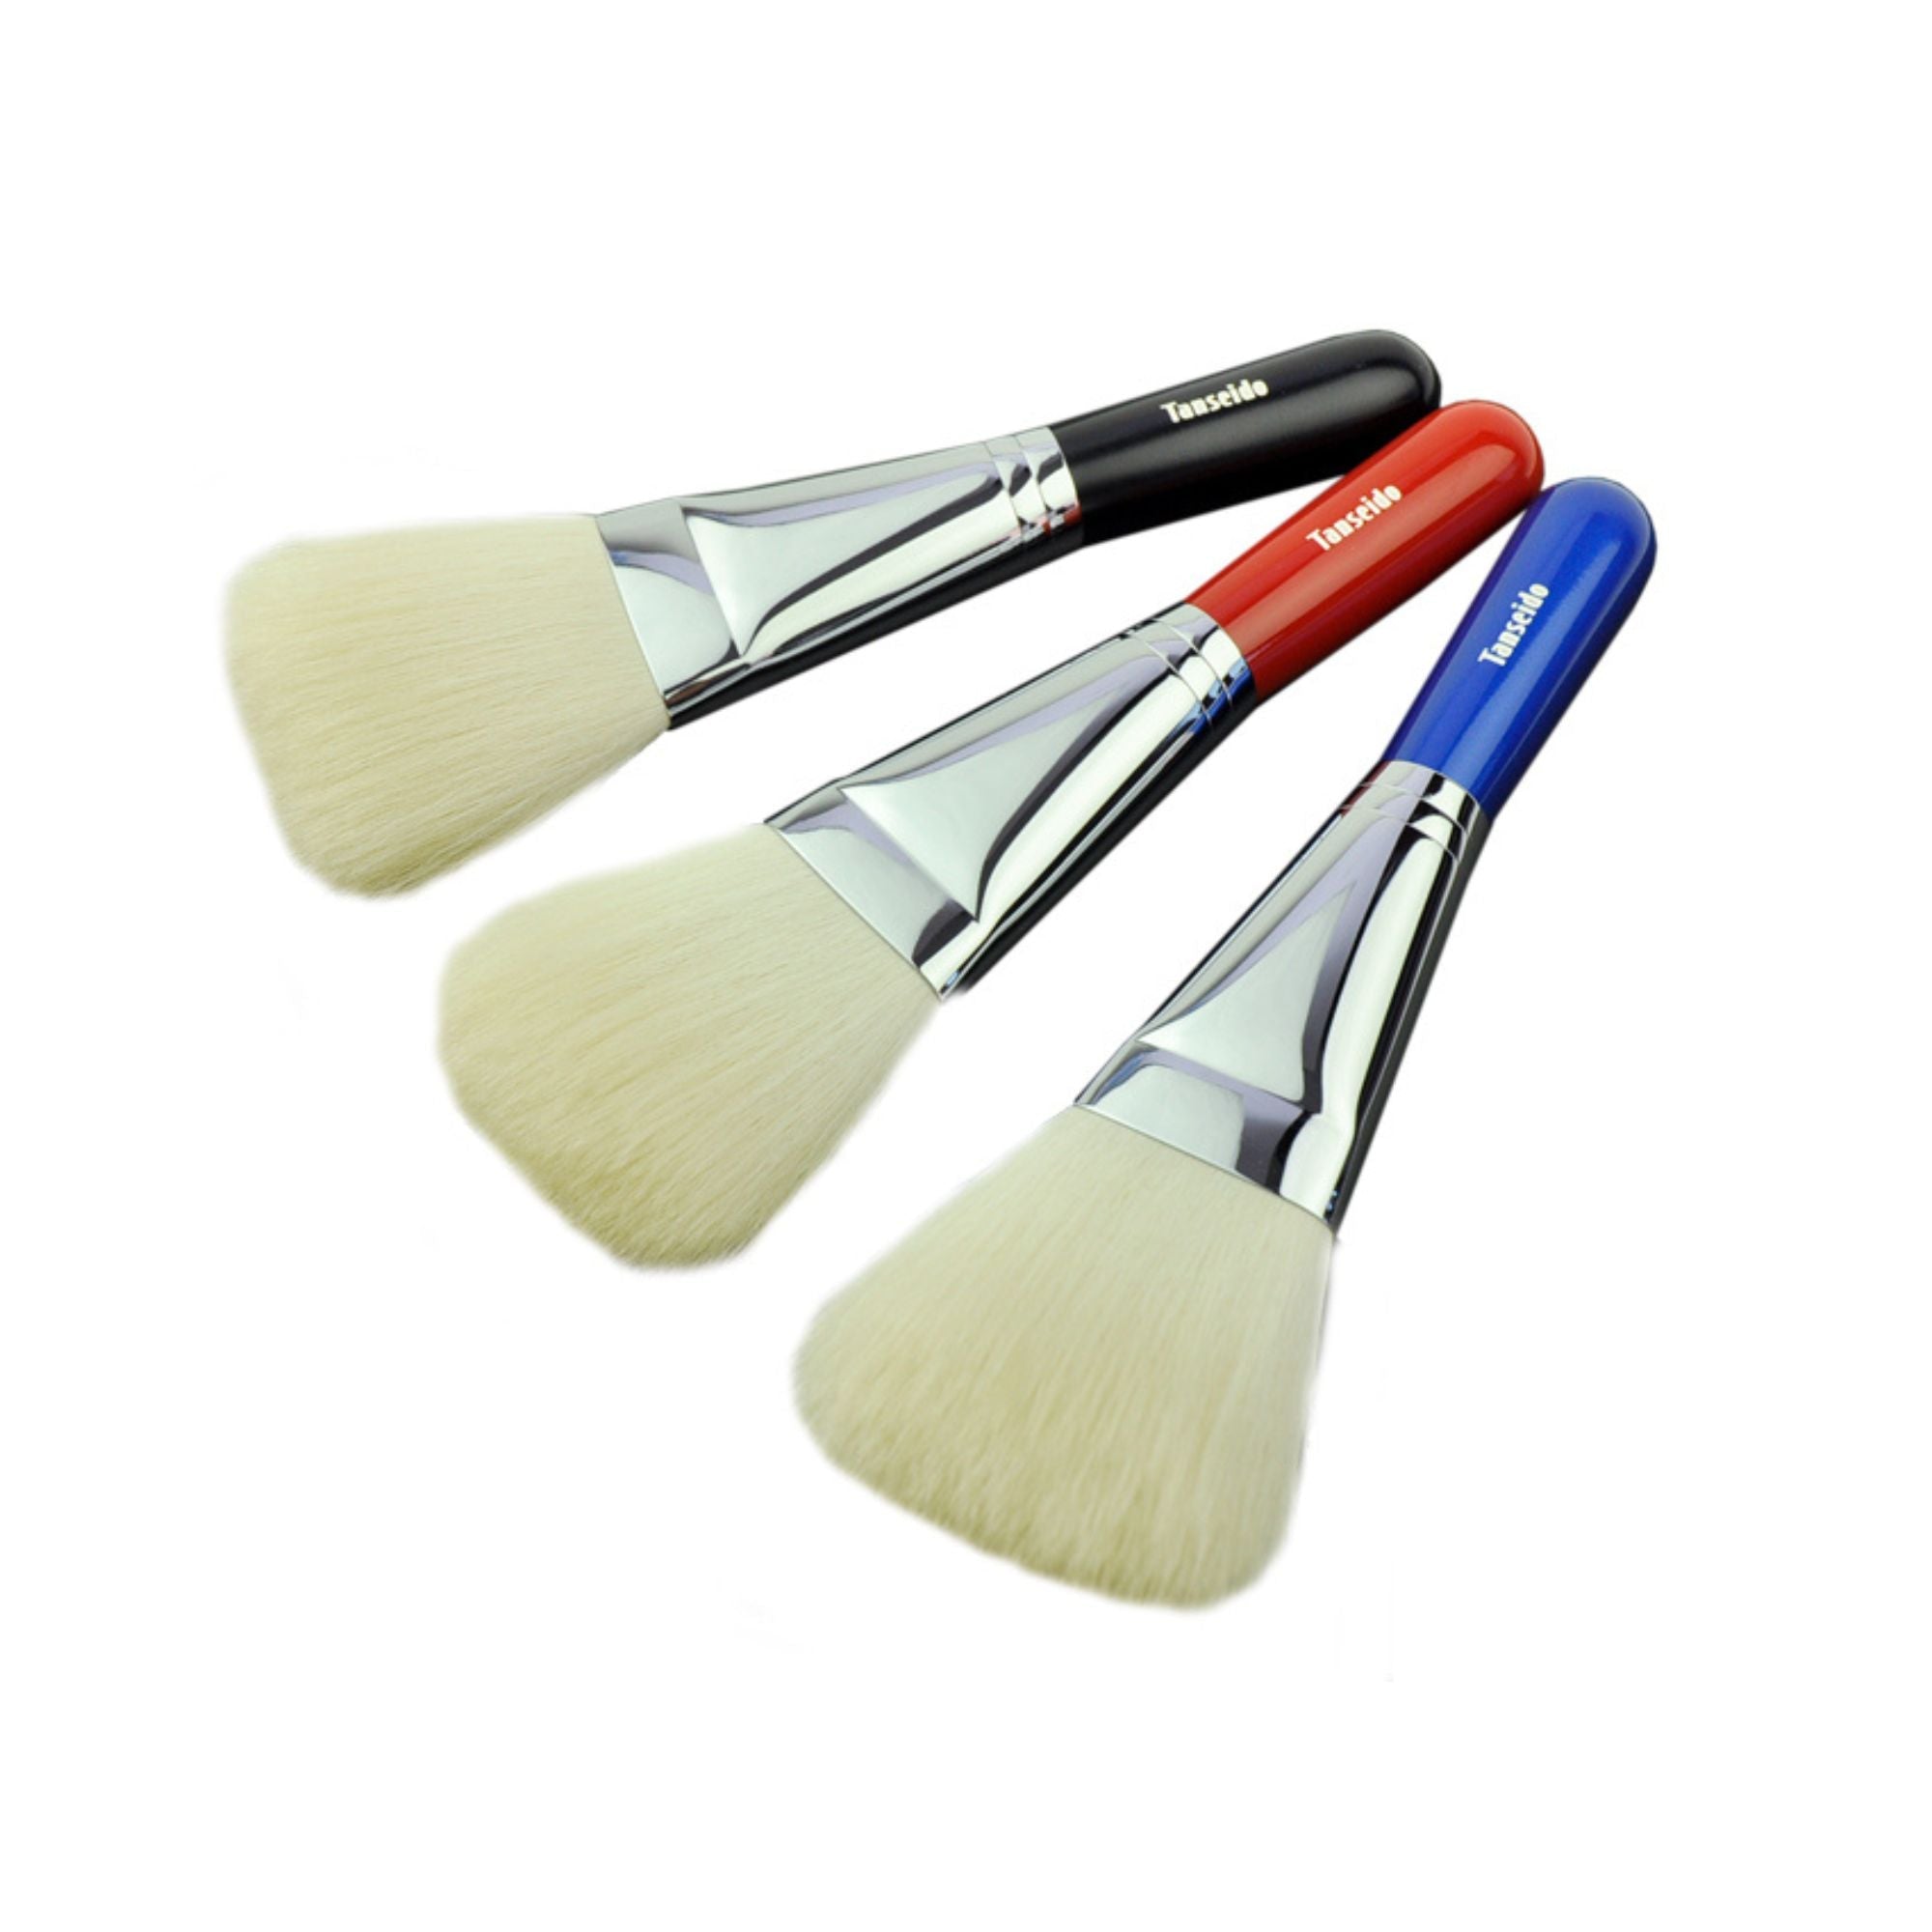 Tanseido E33 Face Brush - Fude Beauty, Japanese Makeup Brushes